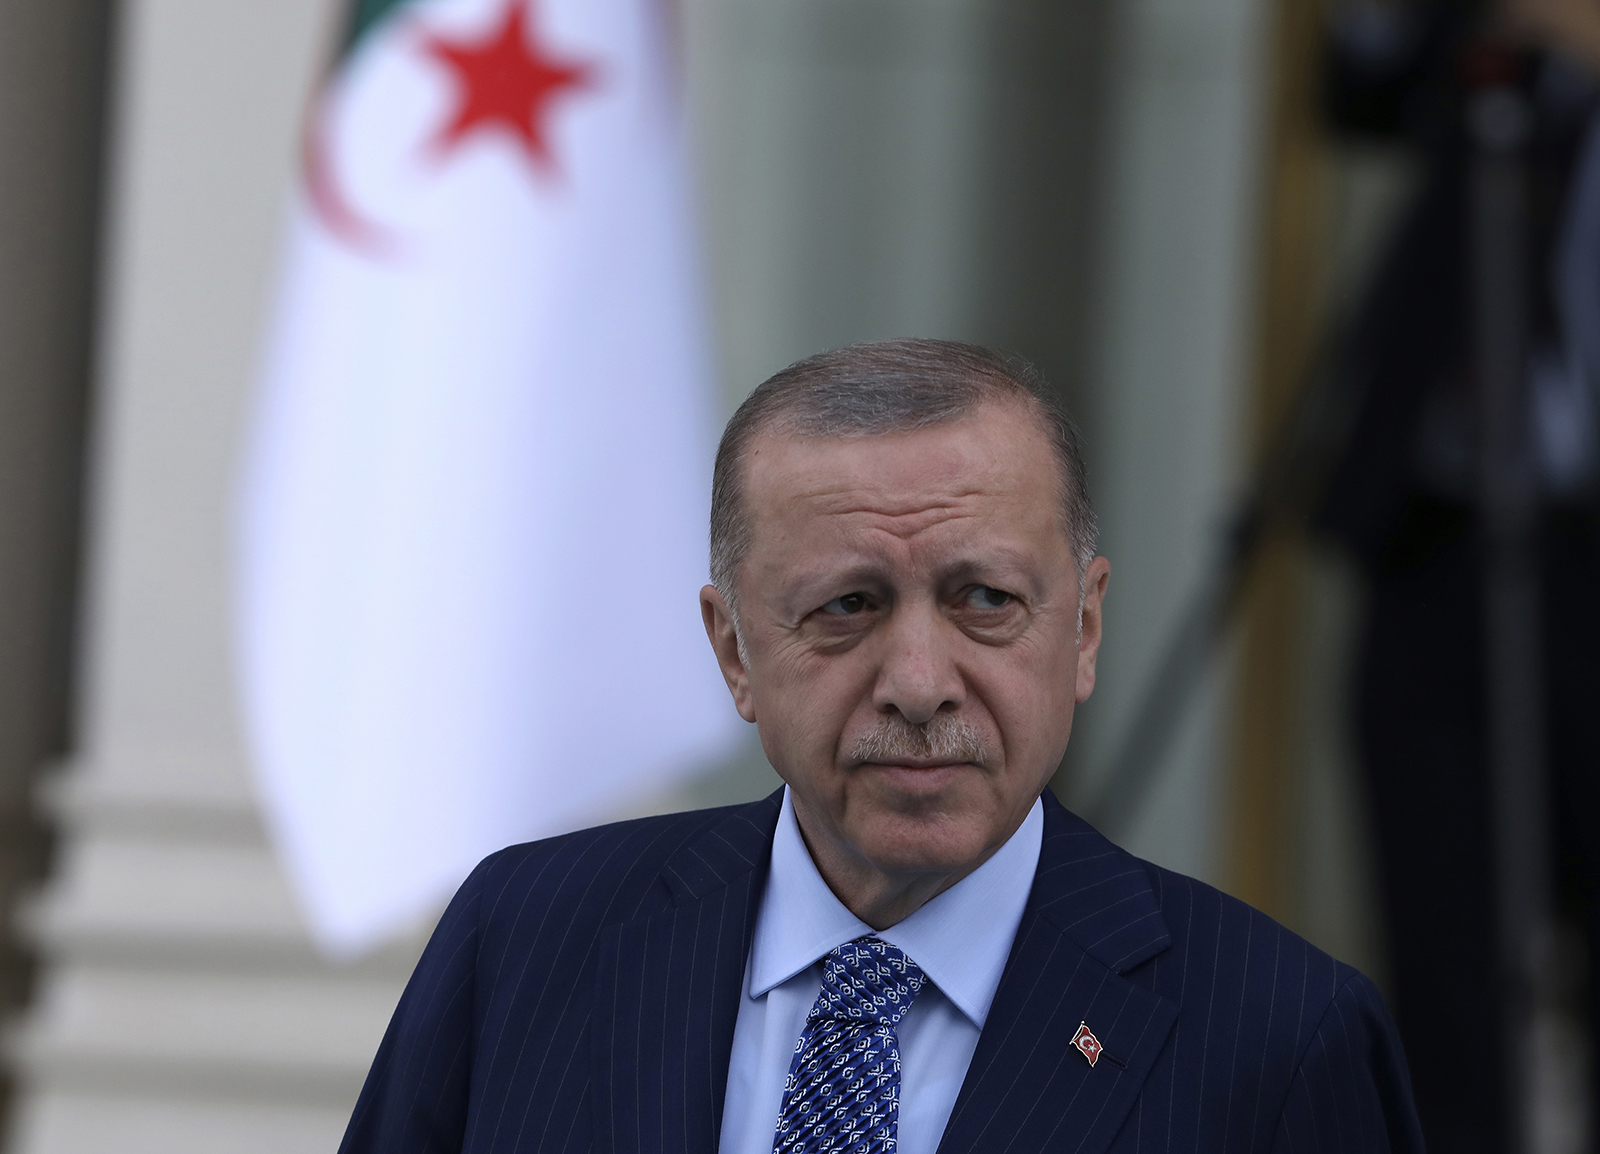 Turkey's President Recep Tayyip Erdogan arrives for a ceremony in Ankara, Turkey, on May 16.